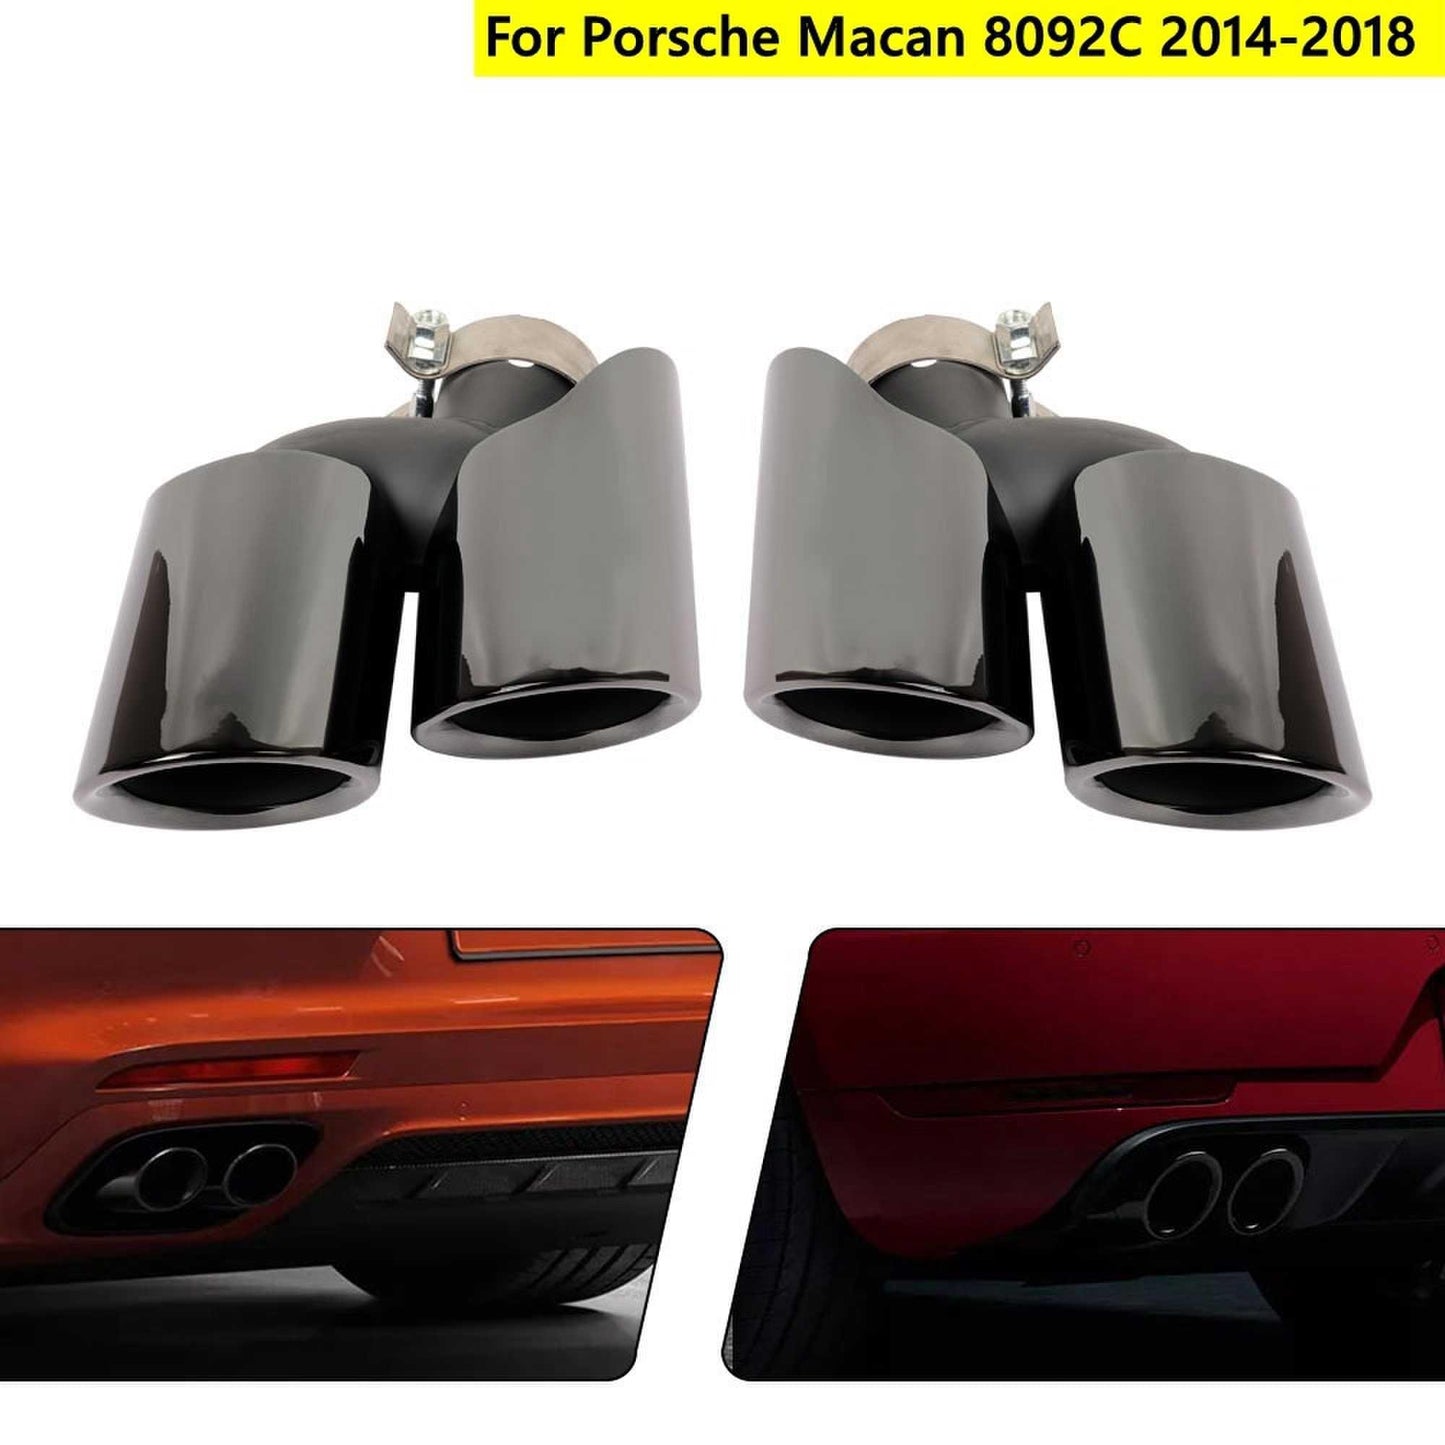 RASTP 1 Pair Stainless Steel Exhaust Pipe Tail Muffler Tip for Porsche Macan 8092C 2014-2018 - RASTP